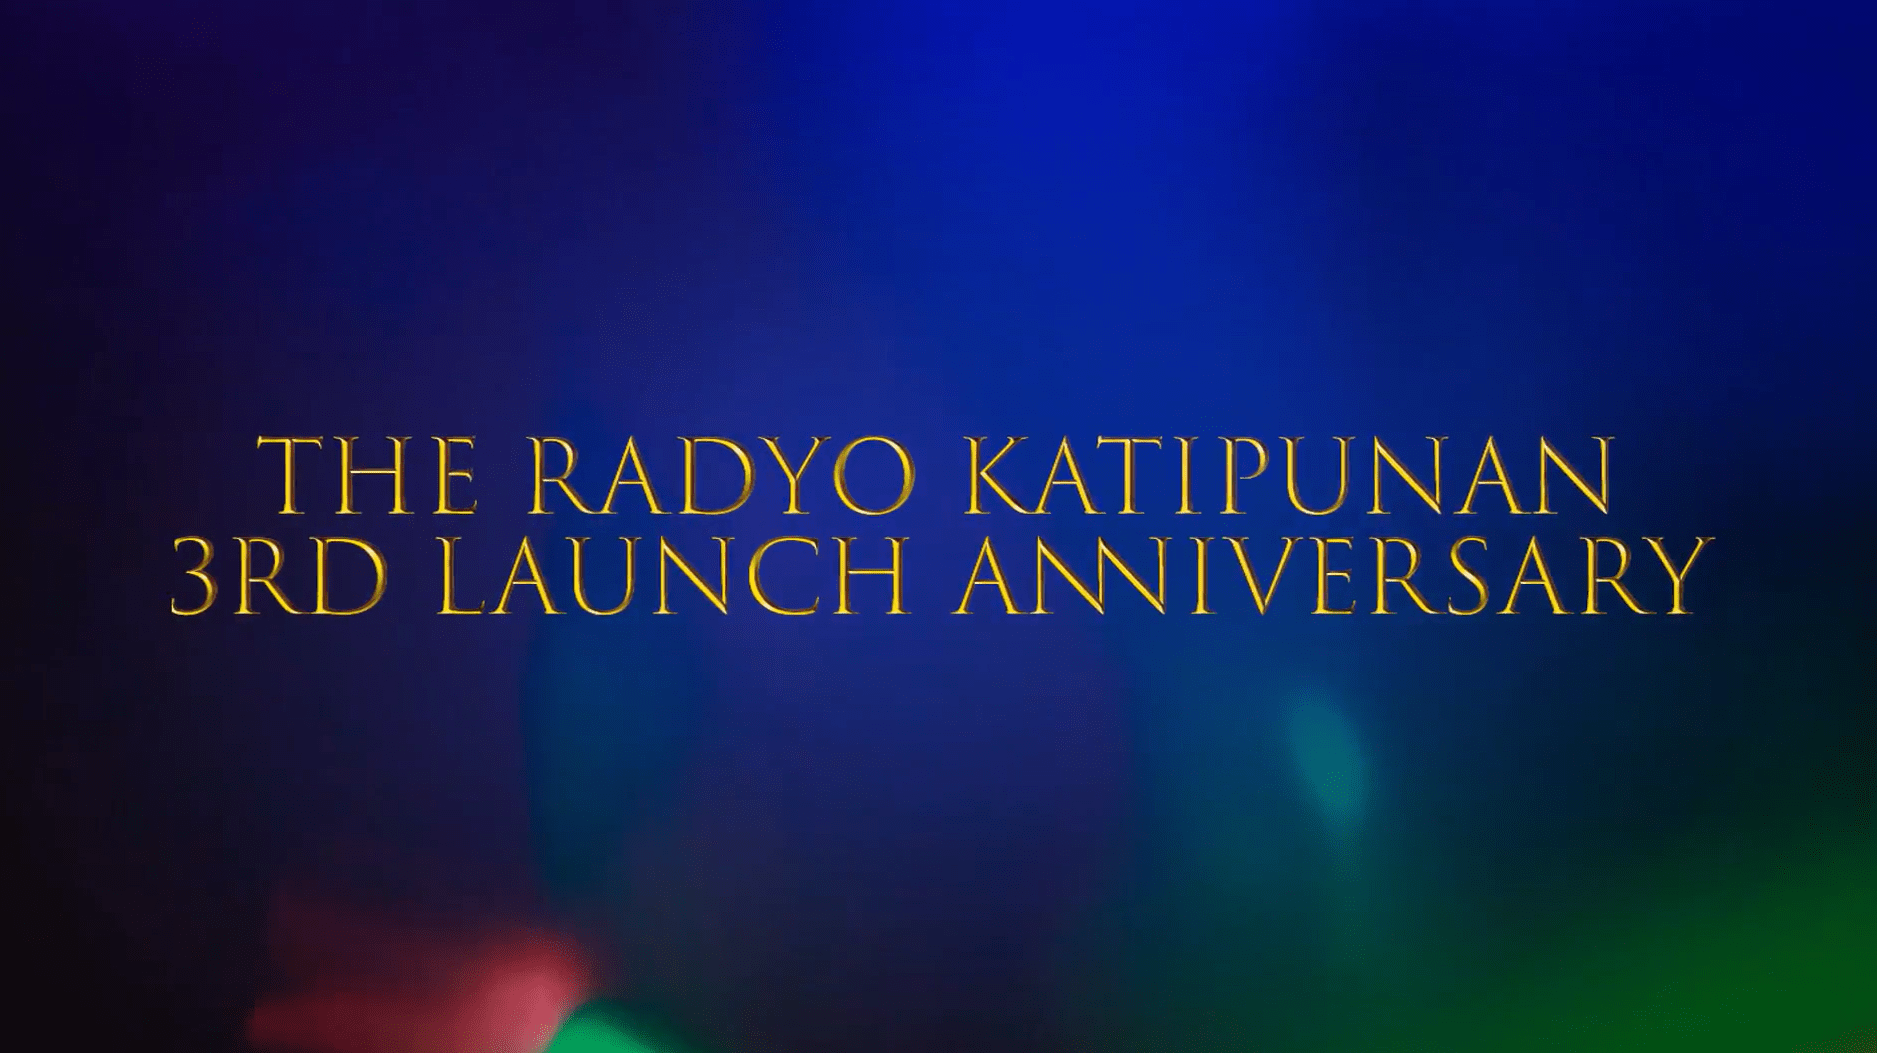 Radyo Katipunan “SHIN3’s” in its 3rd Anniversary